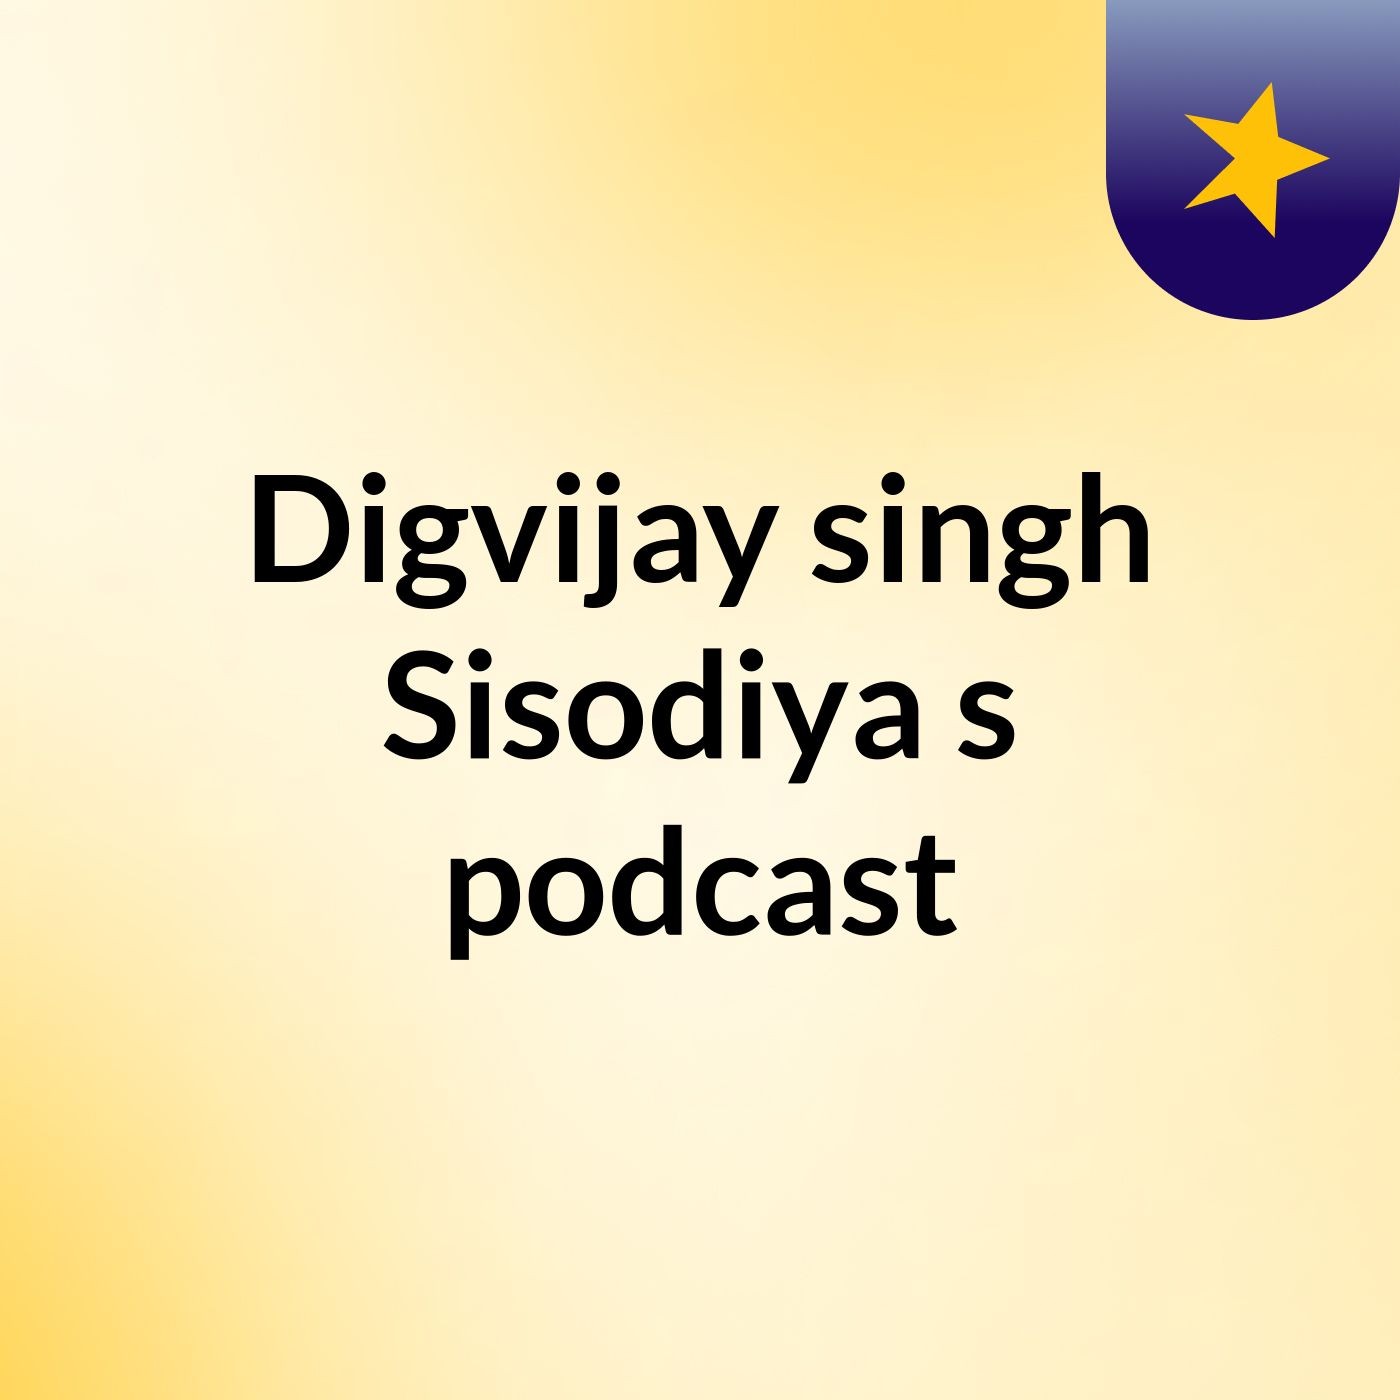 Digvijay singh Sisodiya's podcast